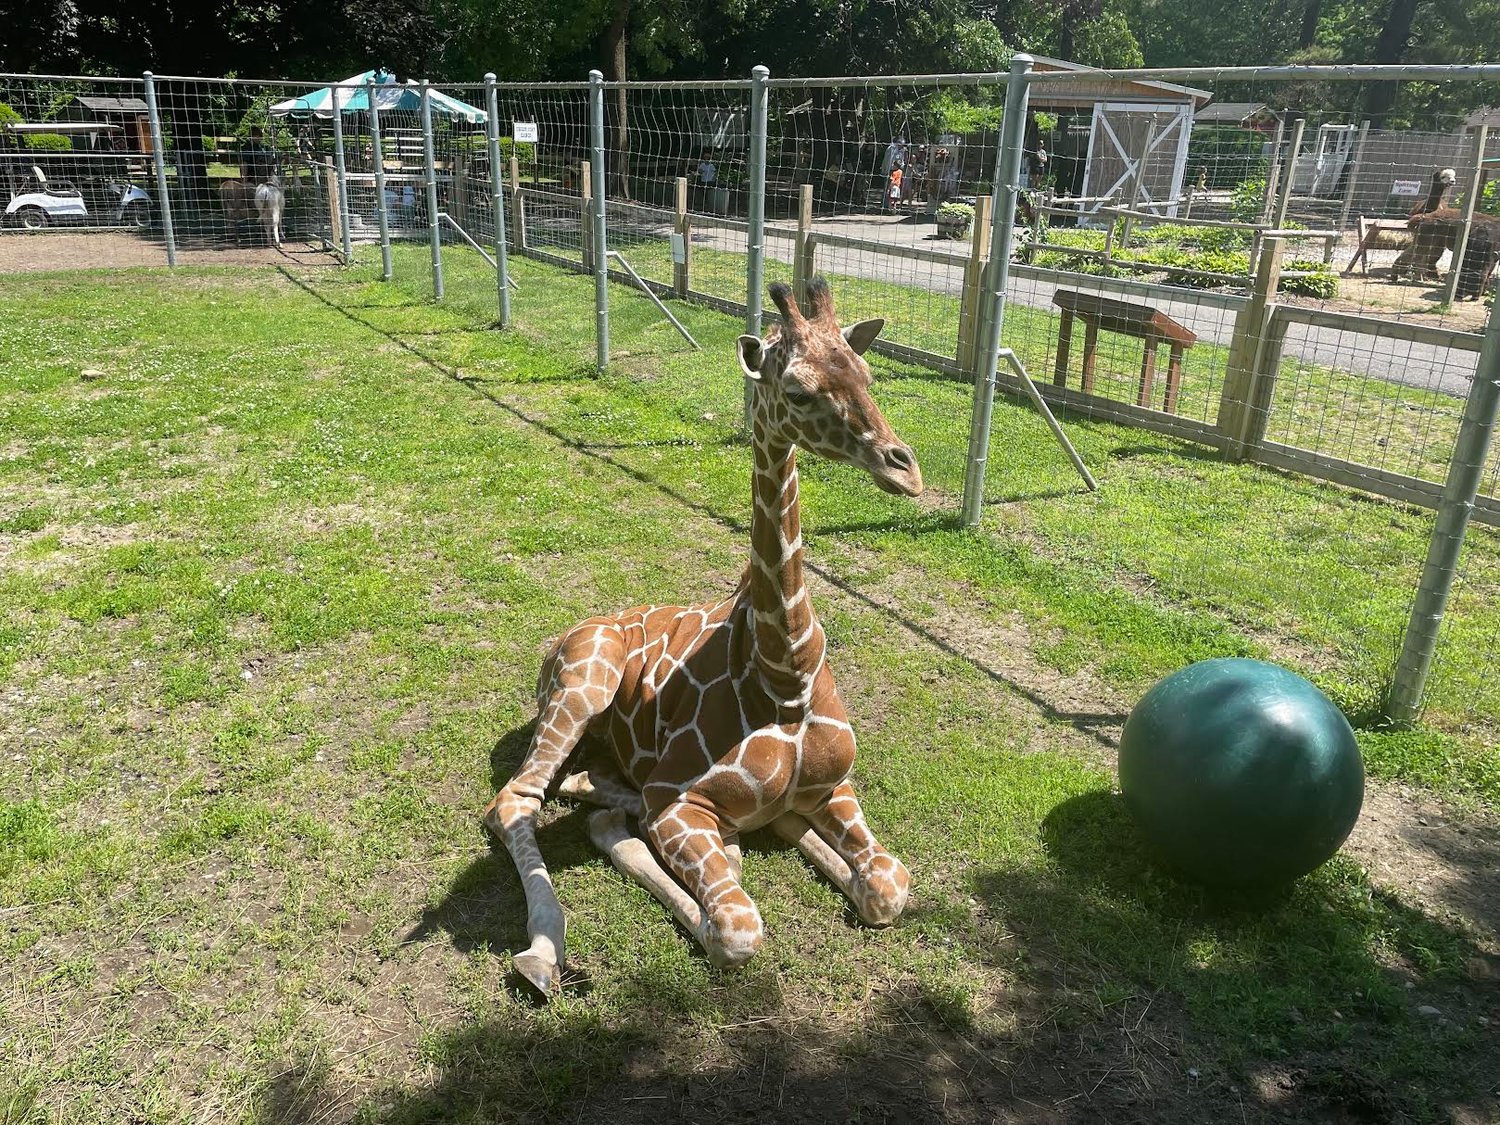 Bobo the giraffe recently celebrated his 2nd birthday.